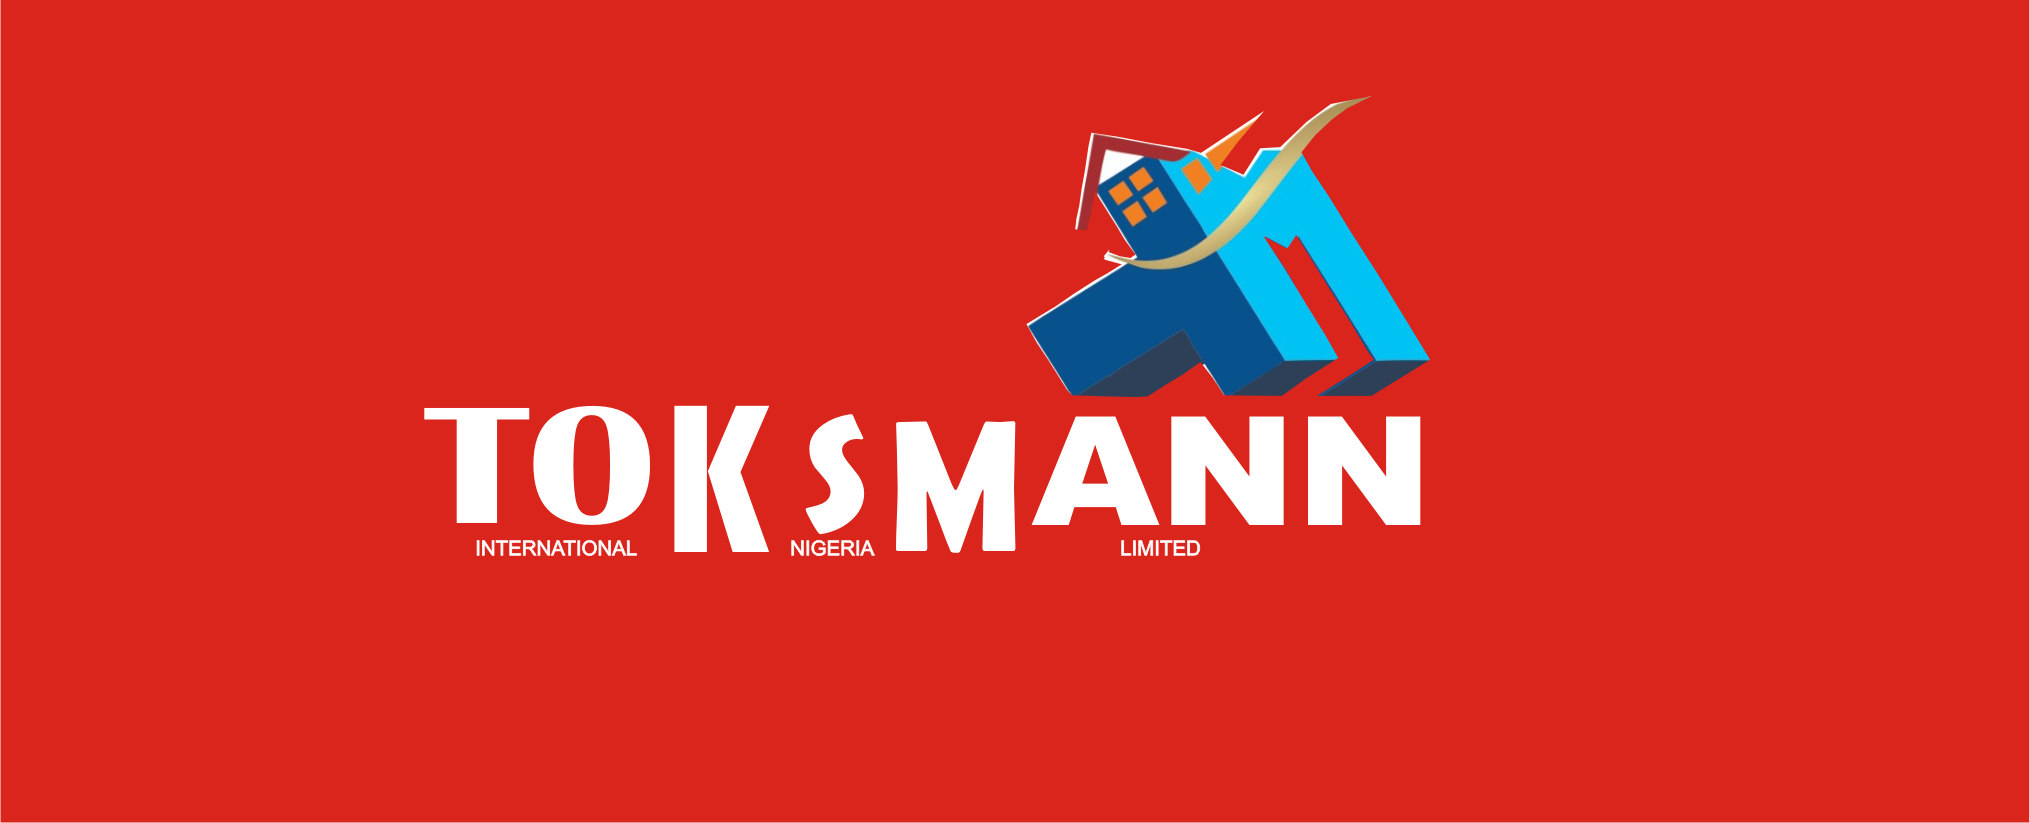 Toksmann International Nigeria Limited